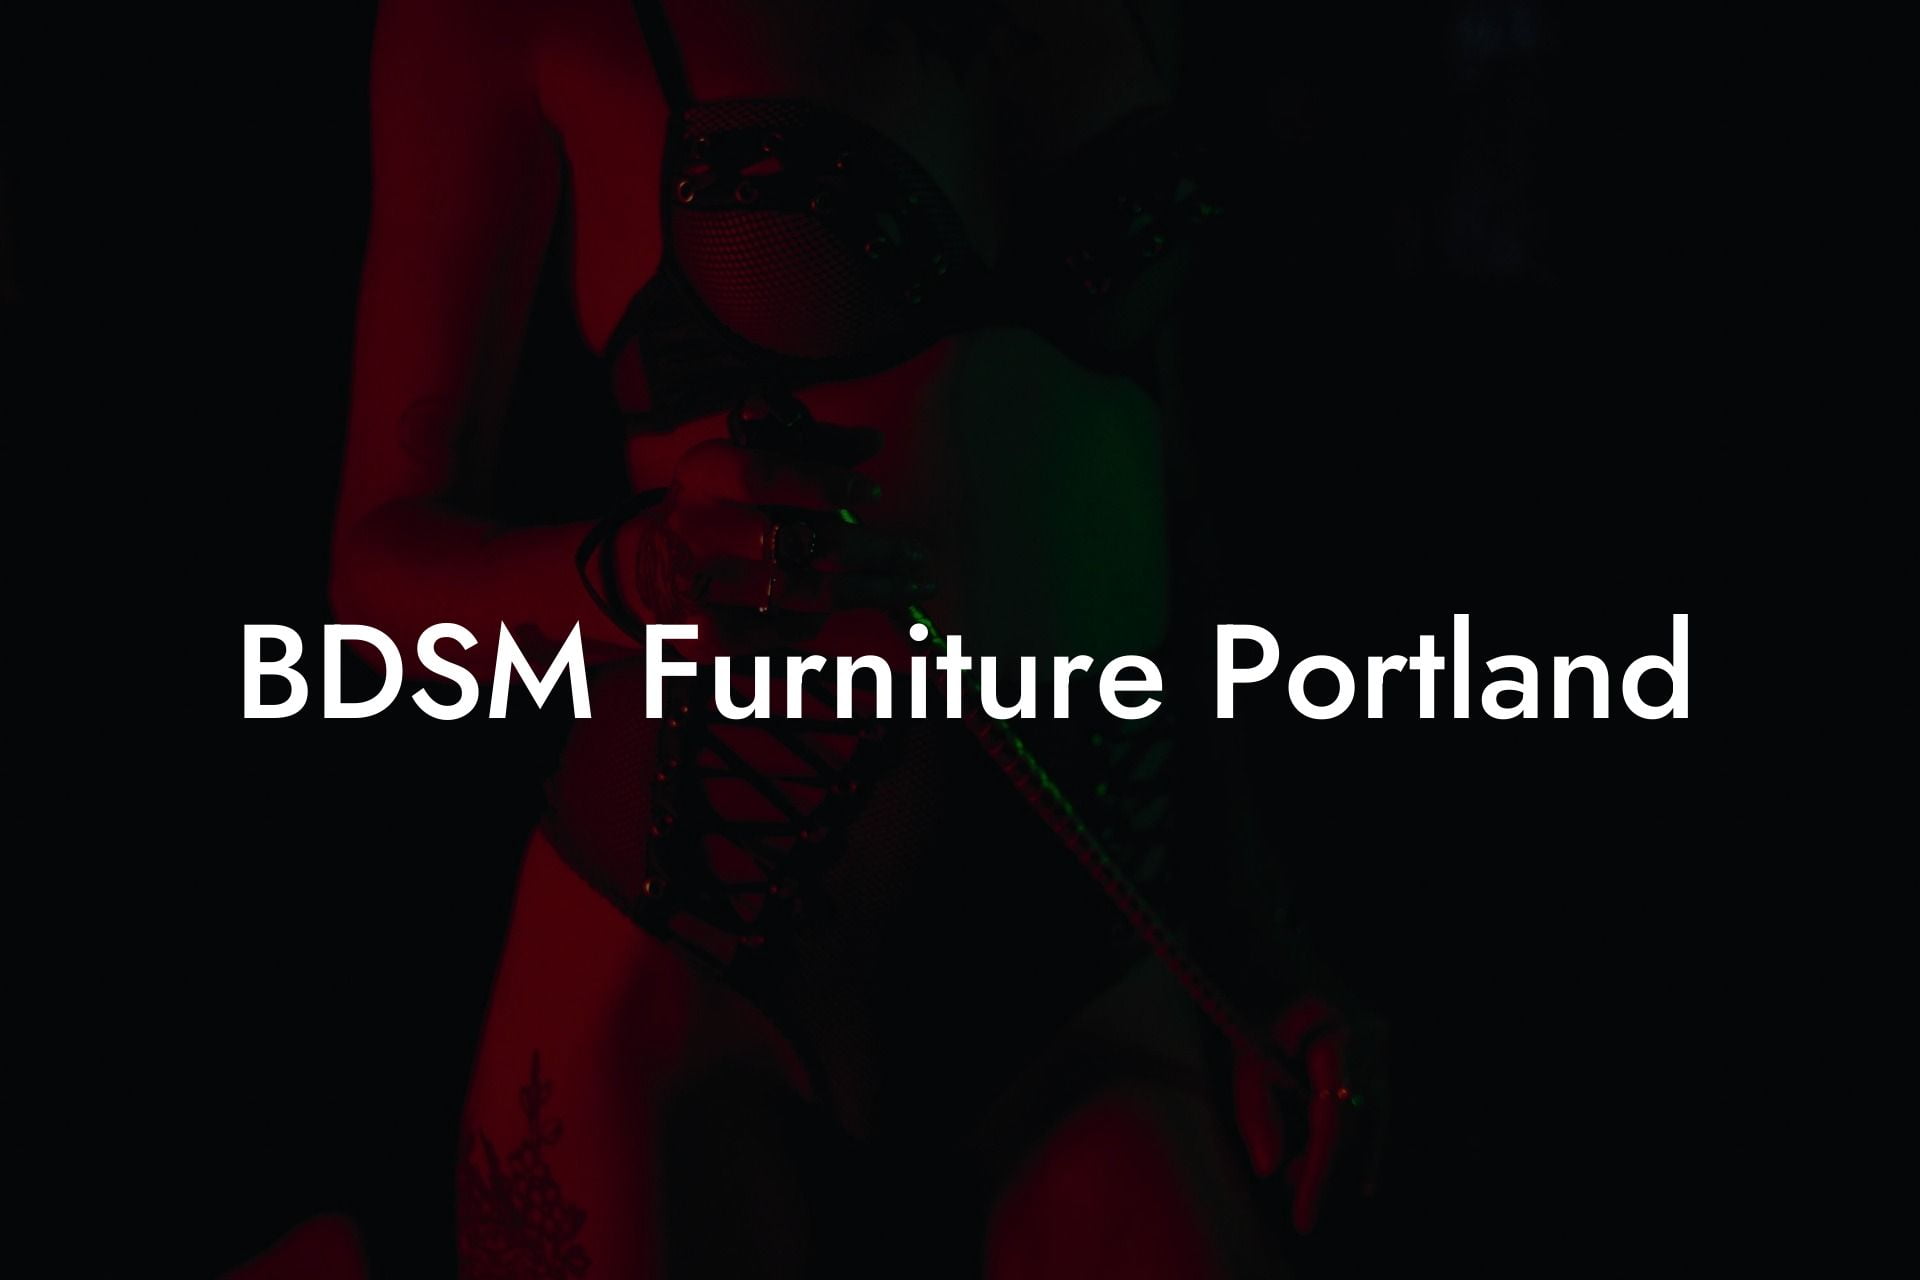 BDSM Furniture Portland